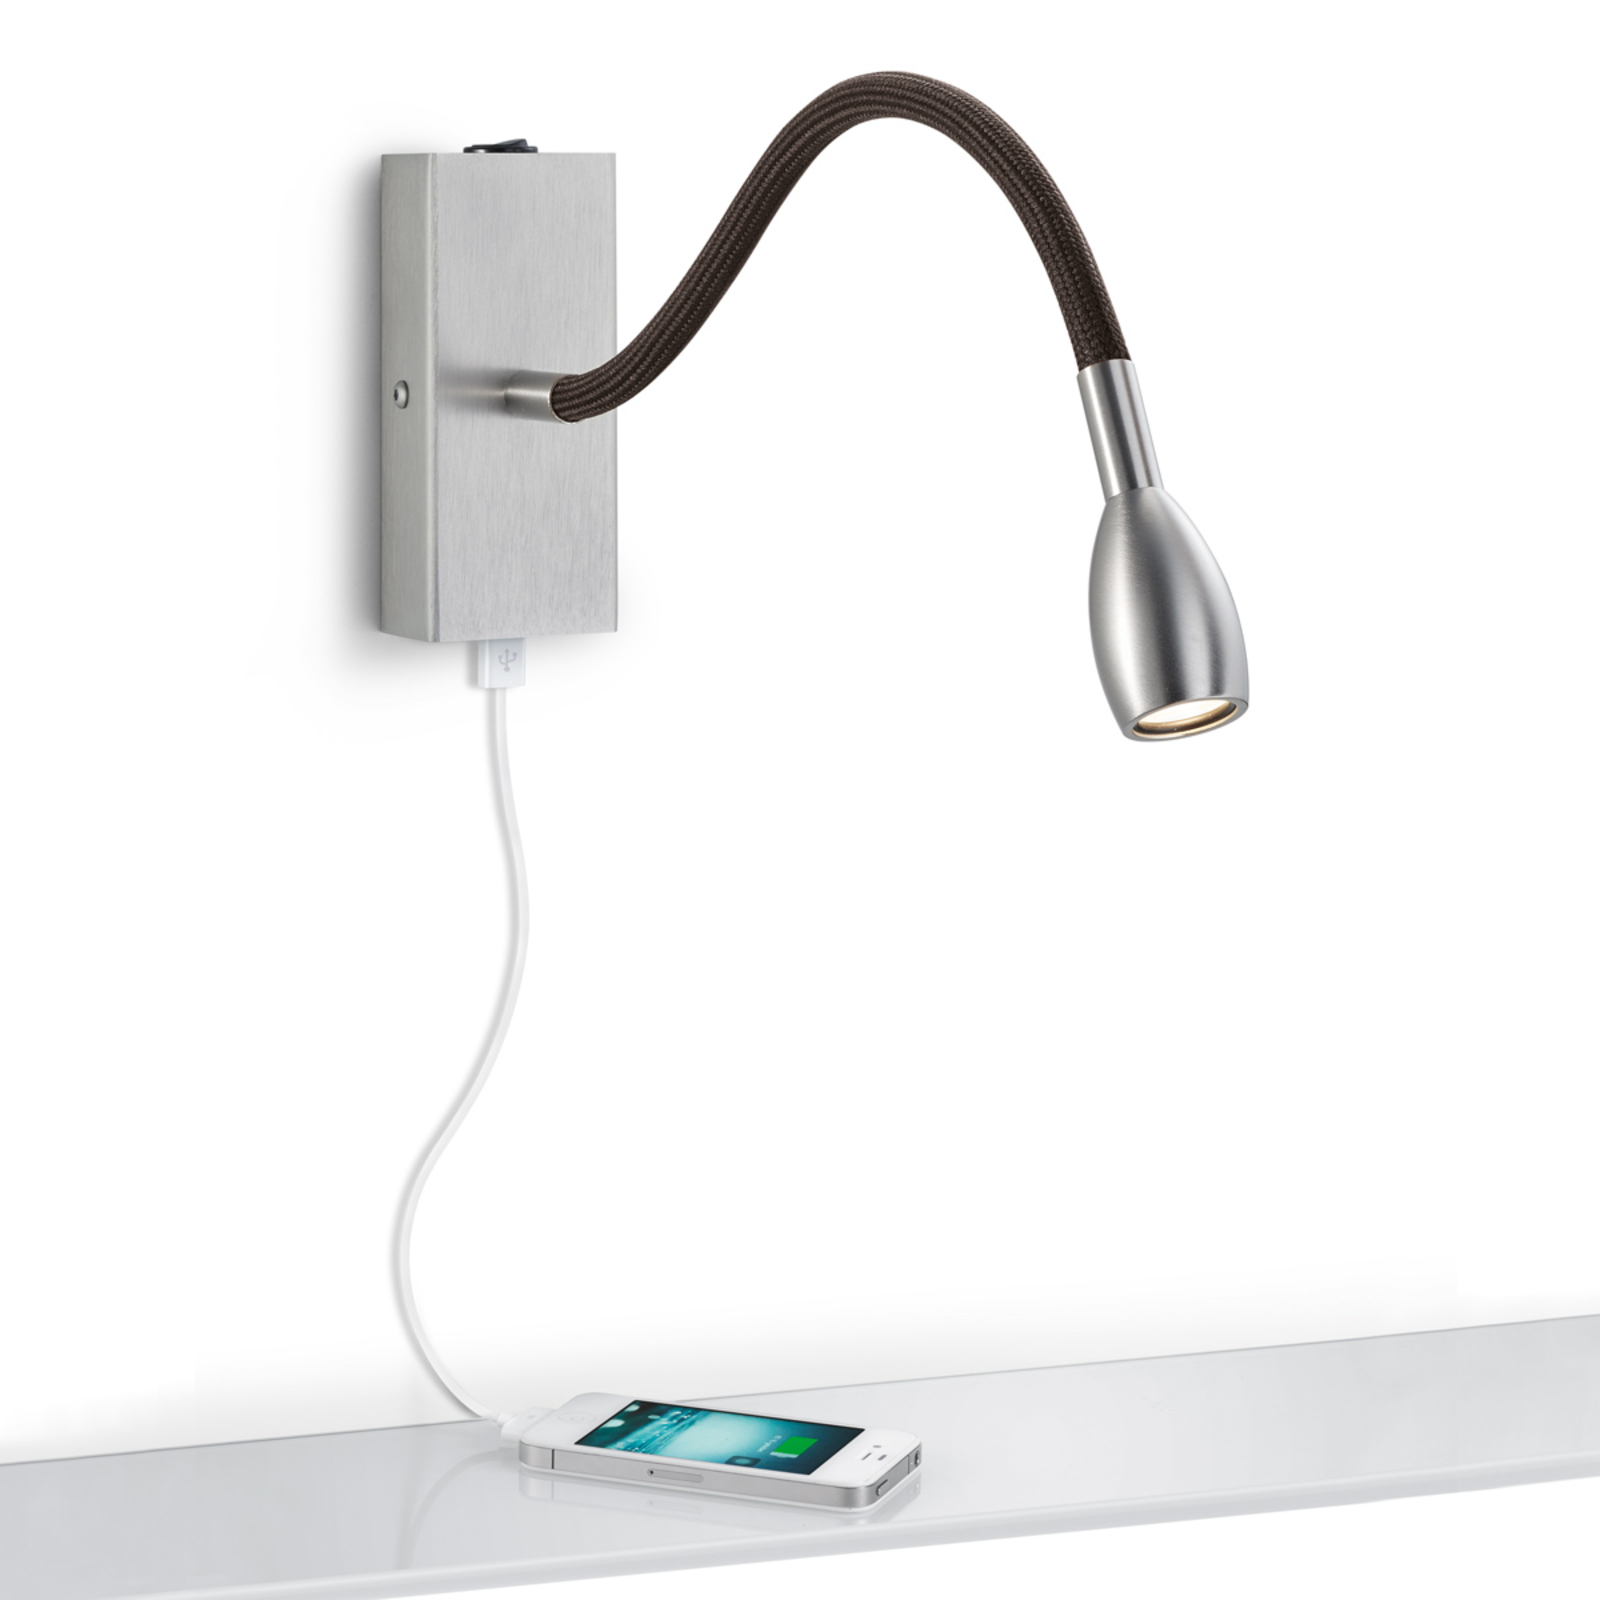 Milos nickel LED wall light with USB charging port